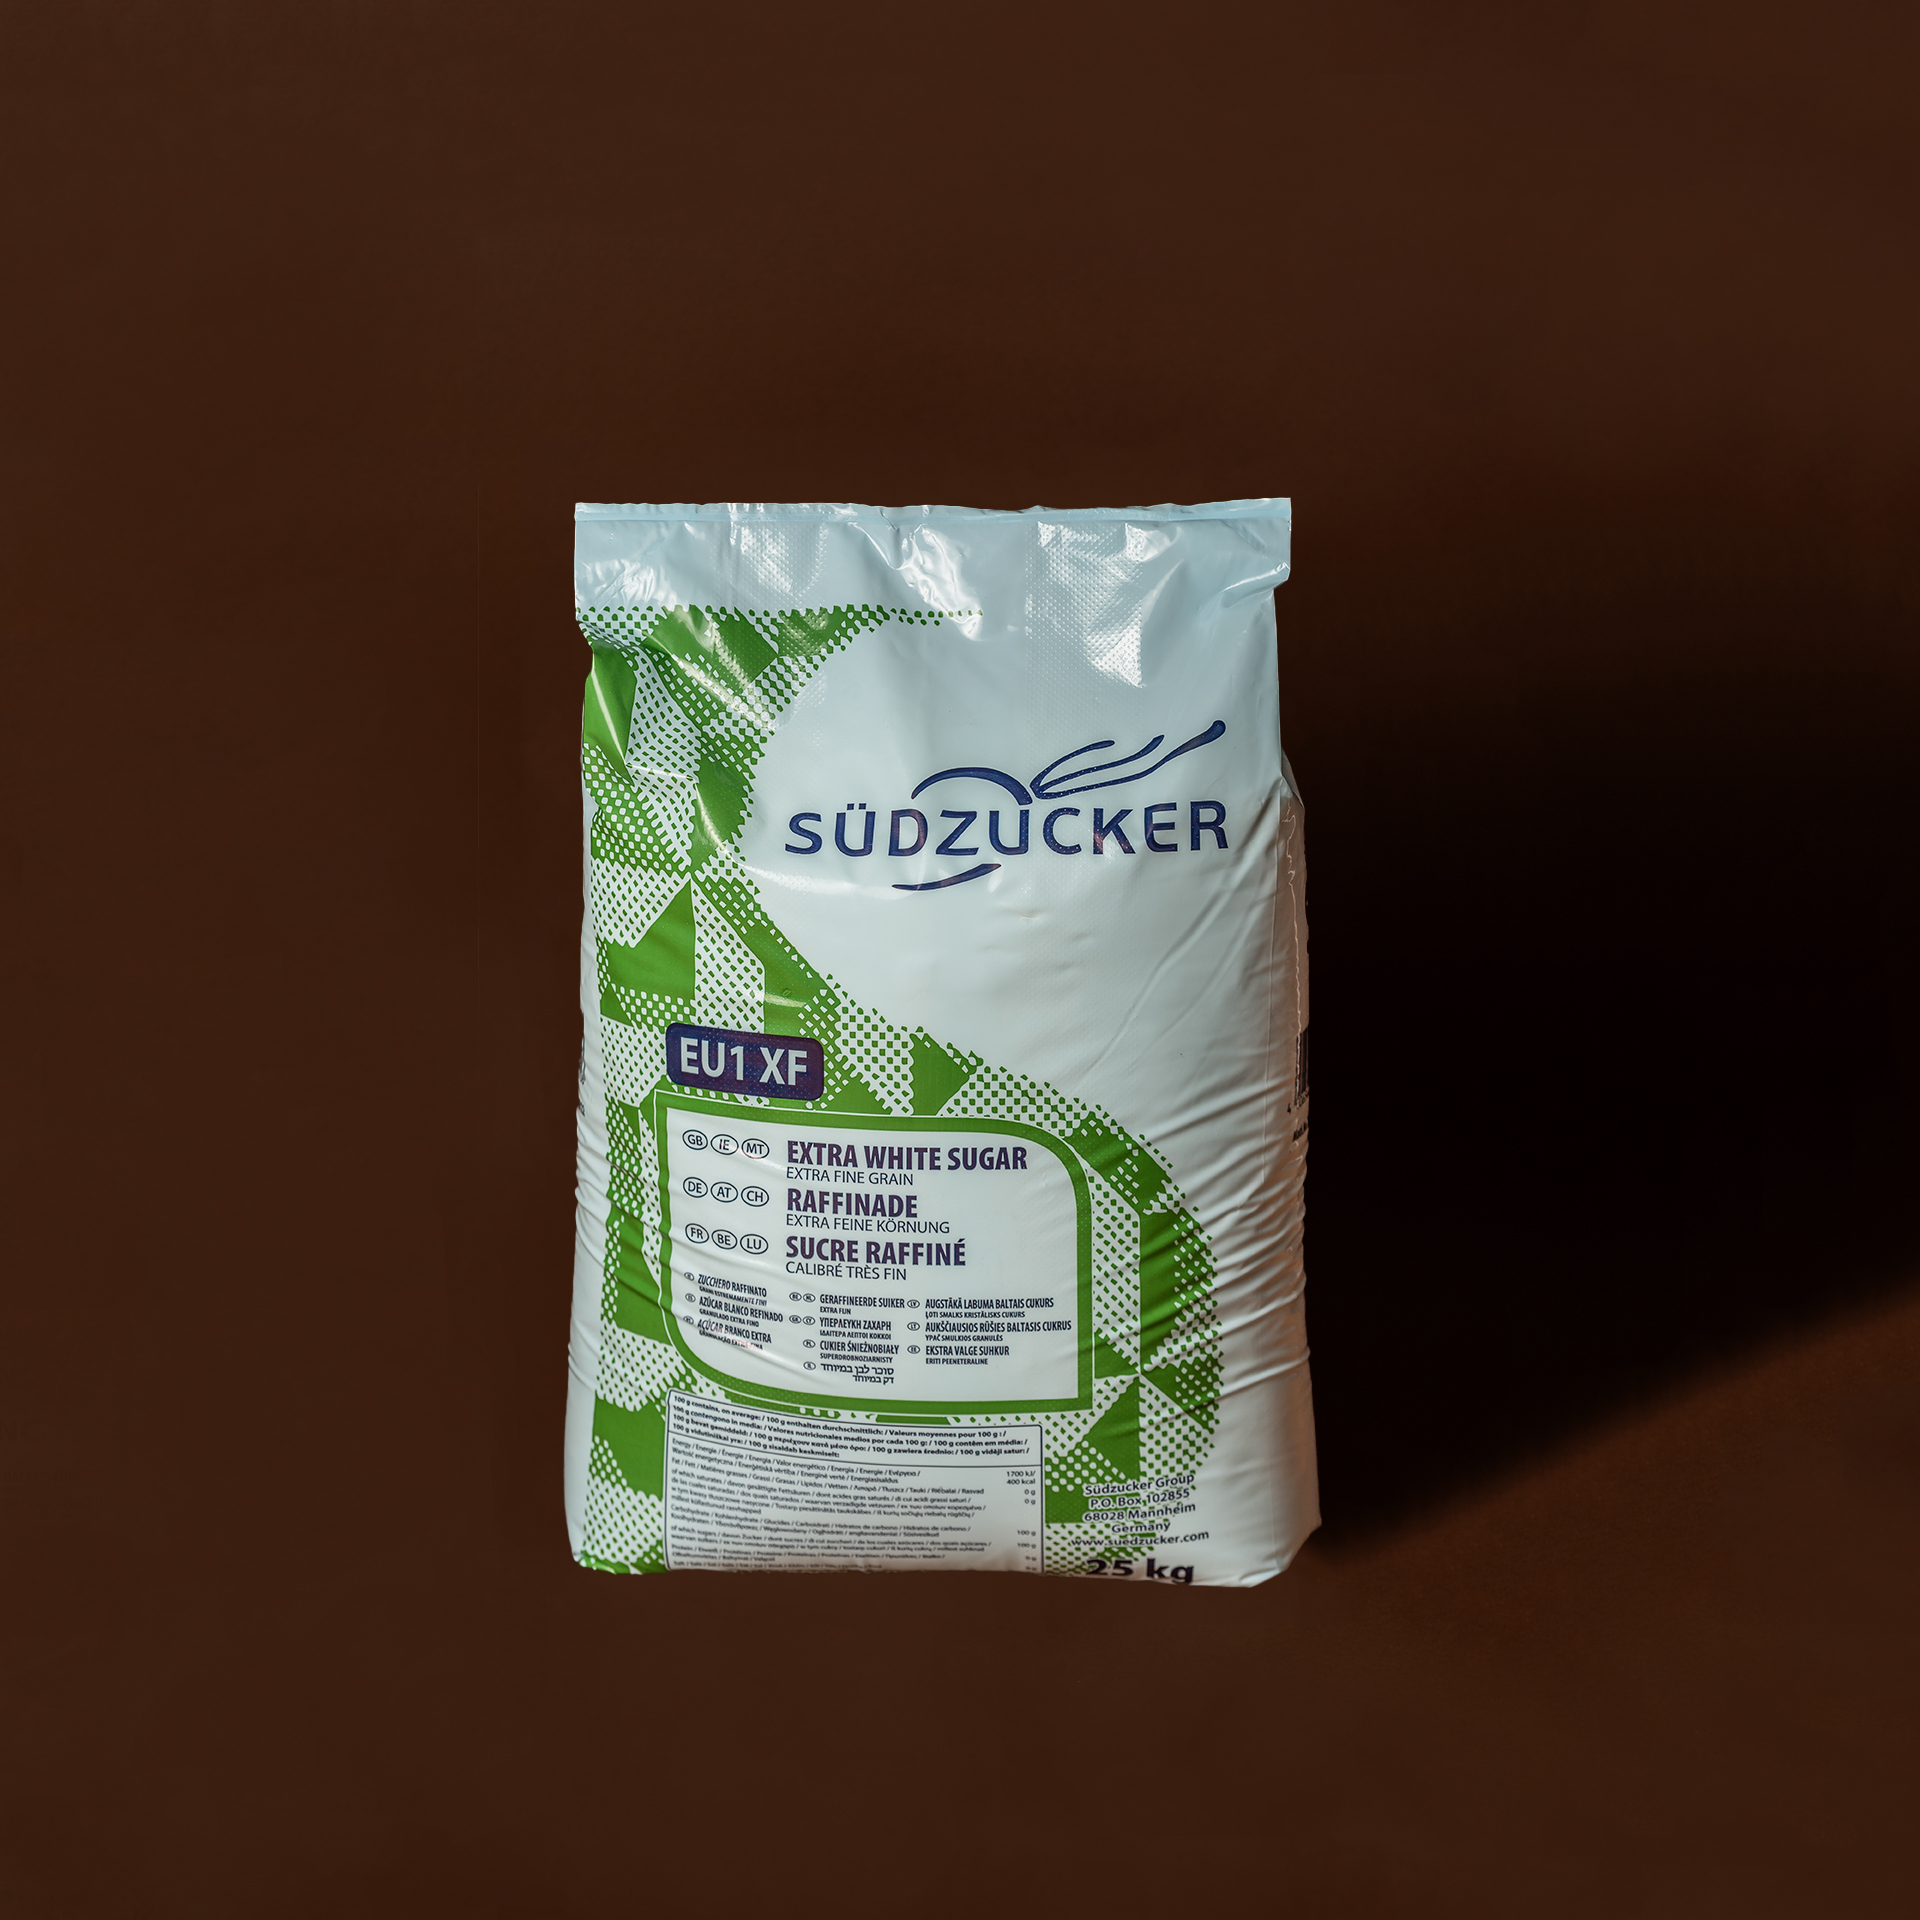 Sudzucker - zucchero bianco fino - EU1 XF - sacco da 25 kg